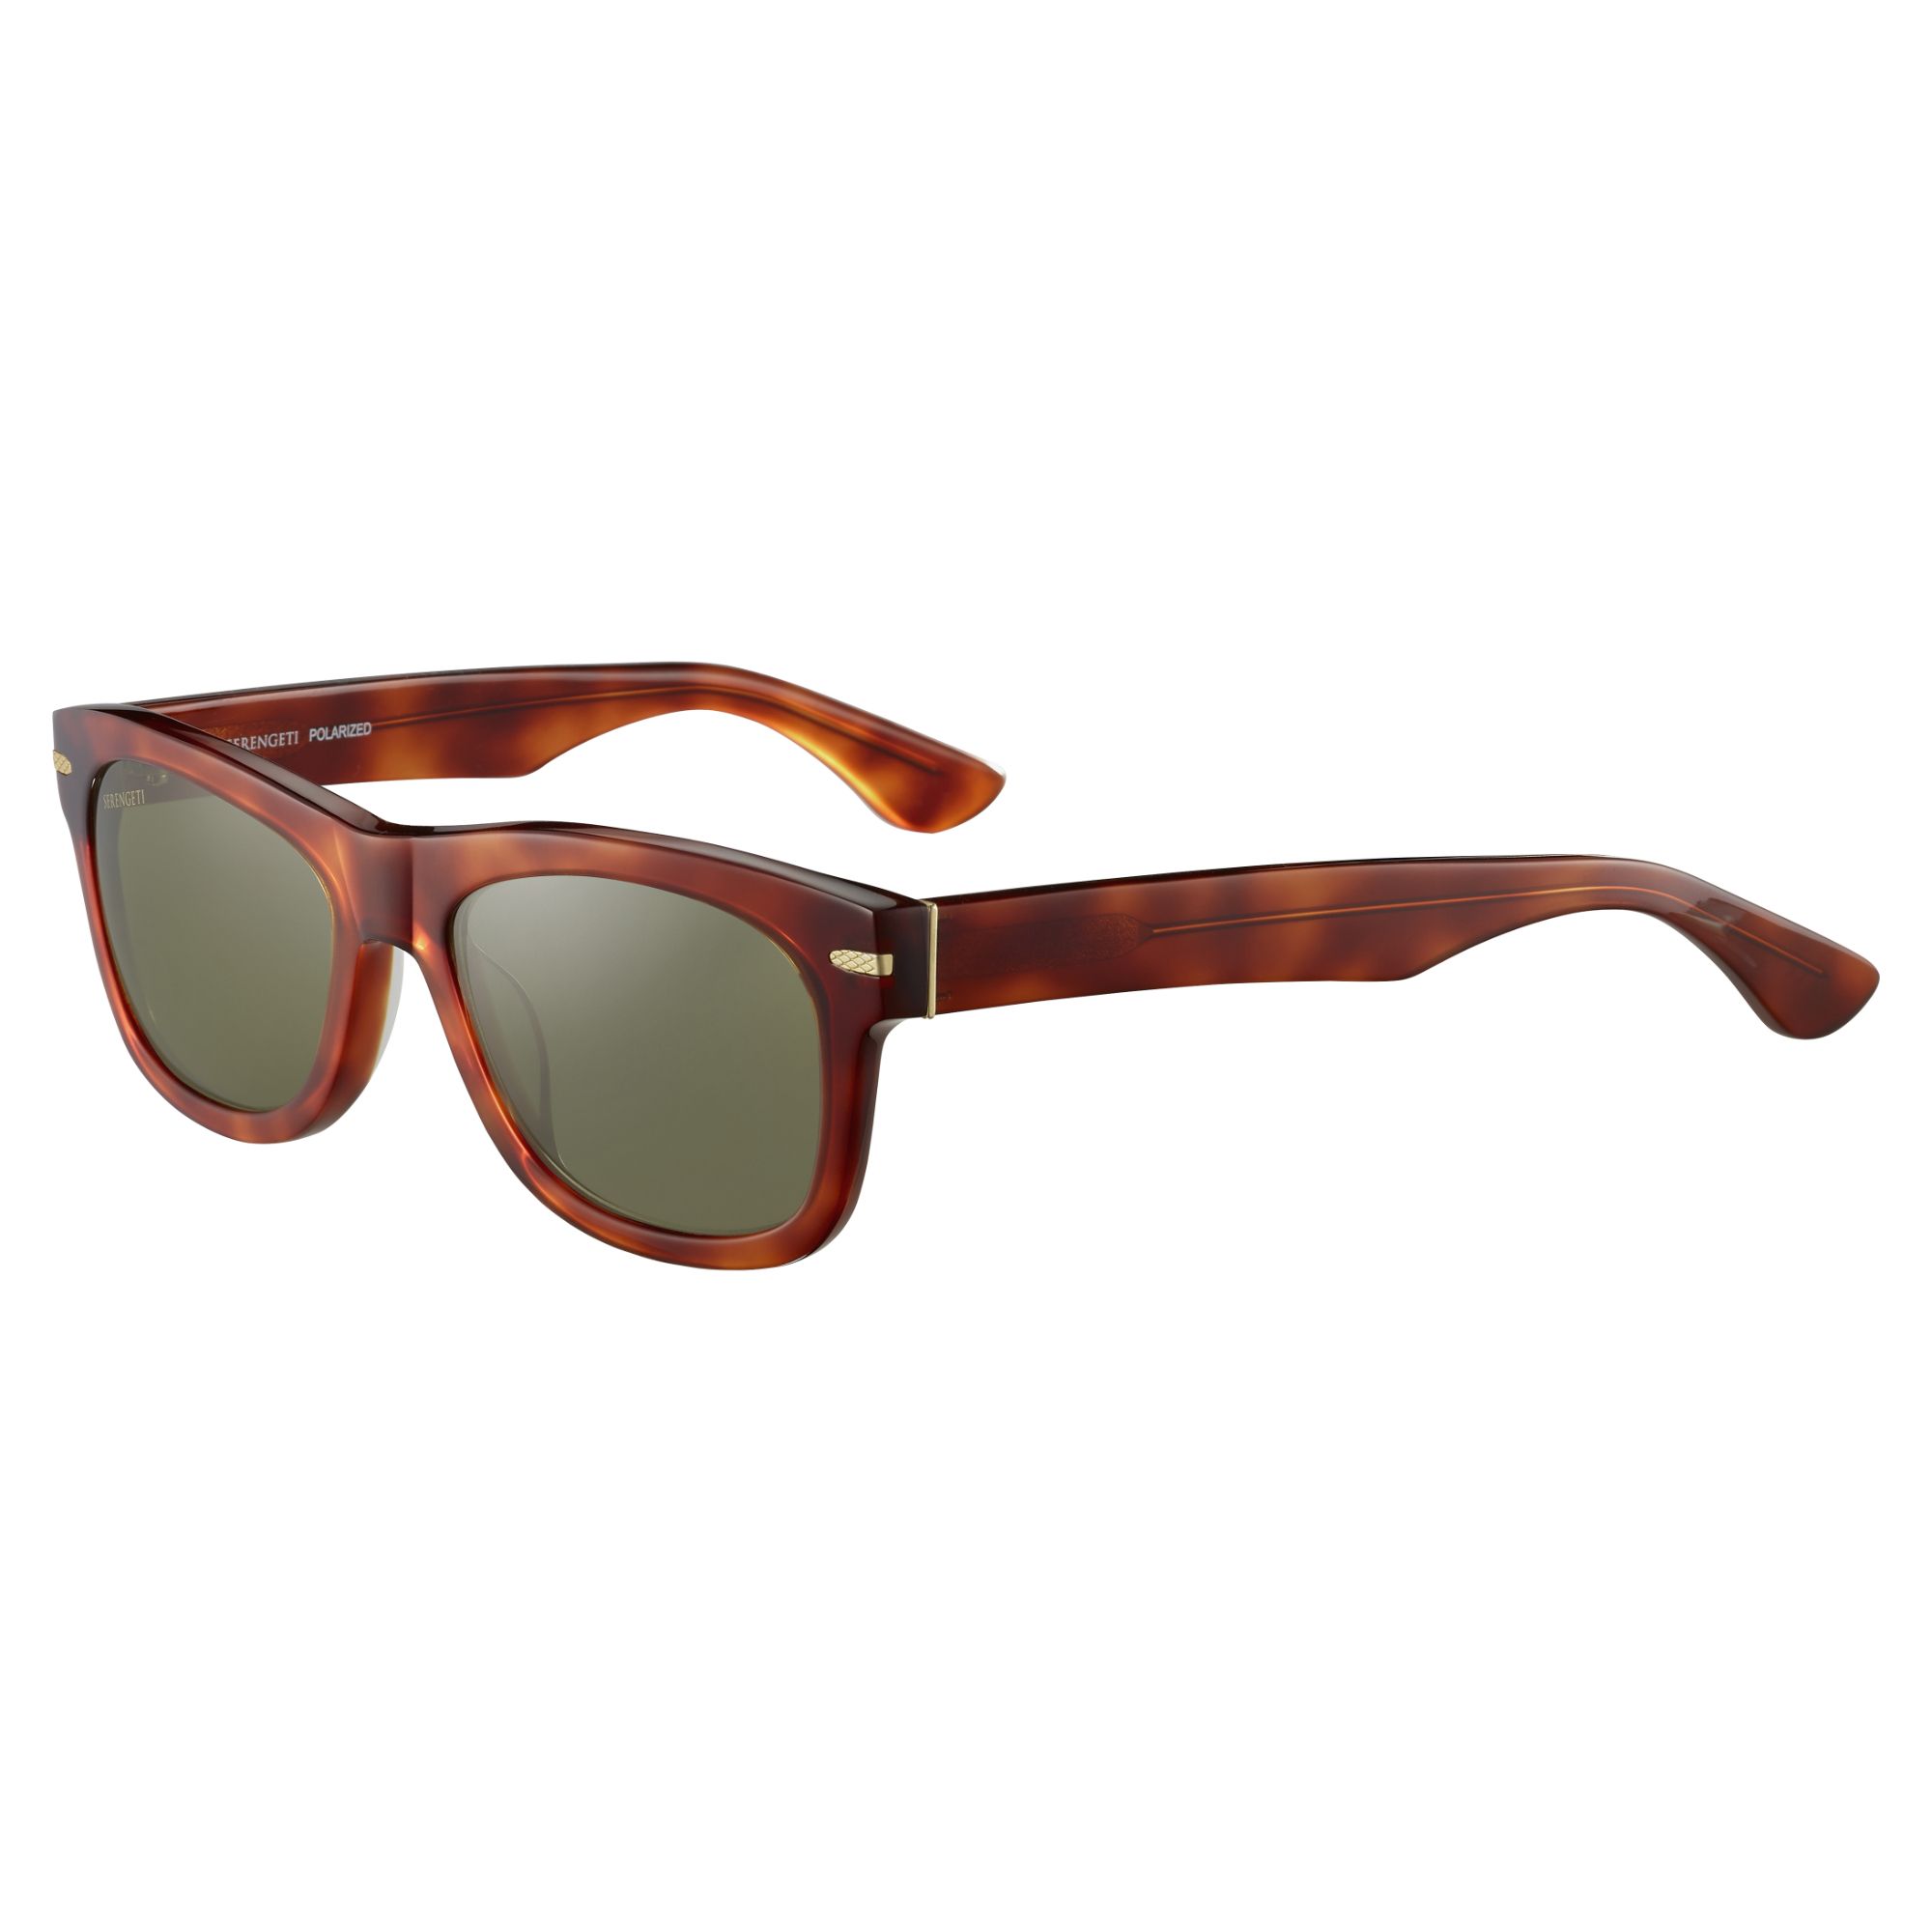 SS549001 Square Sunglasses 001 - size 53